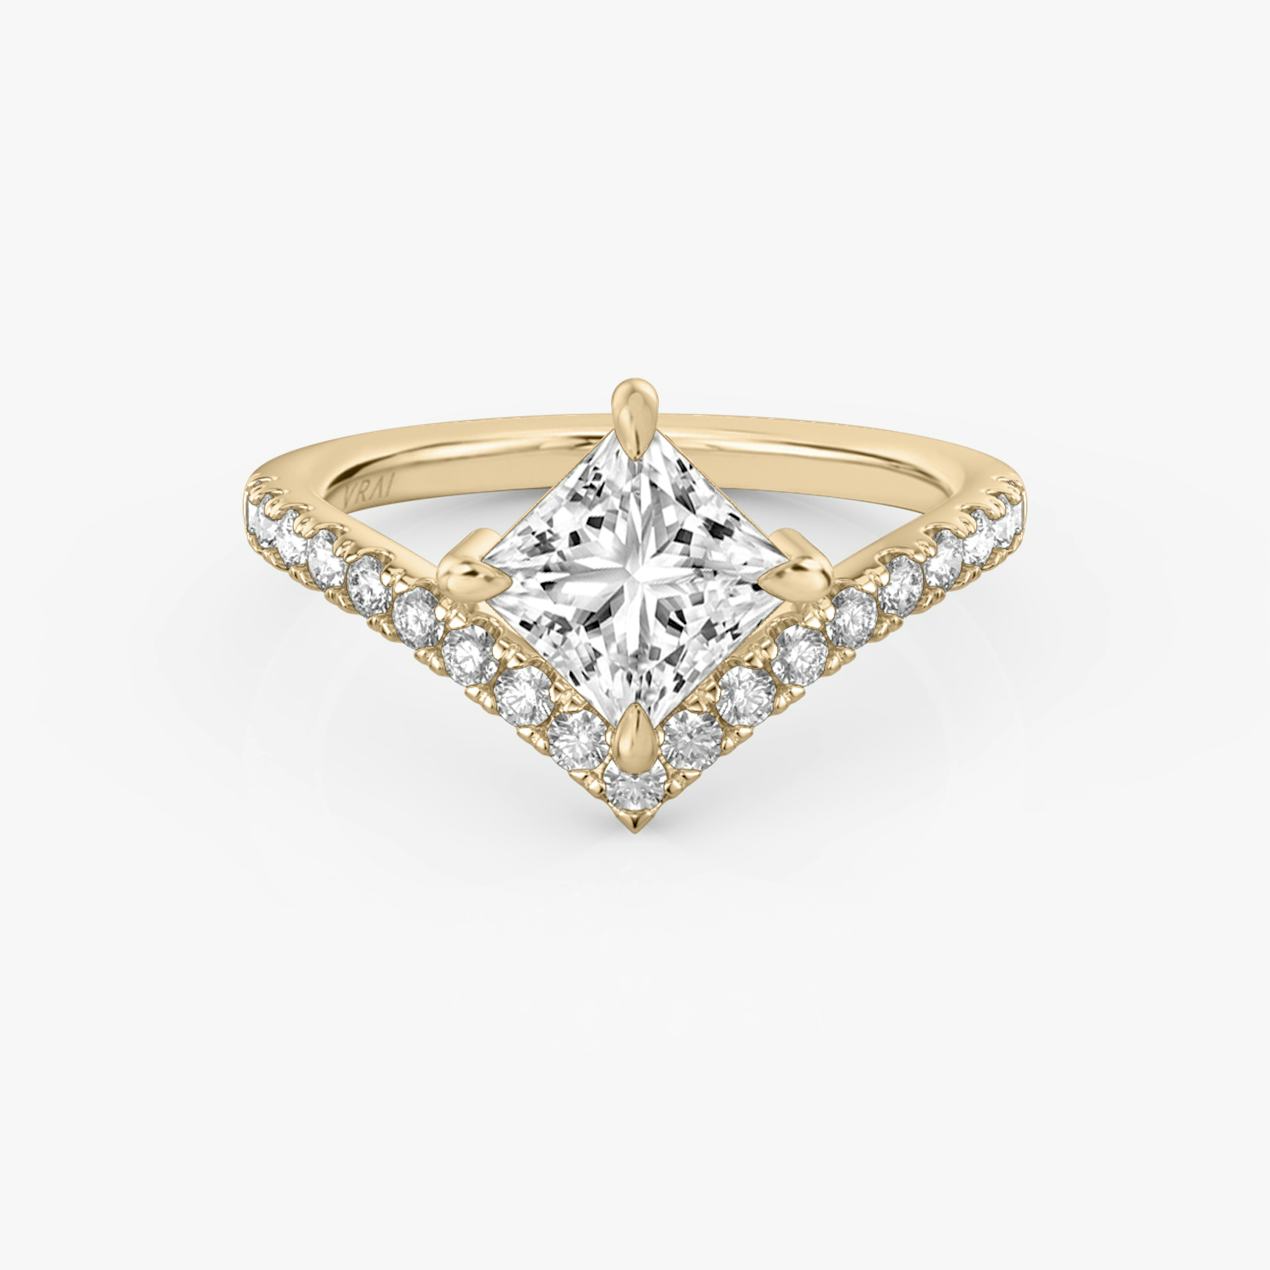 The Signature V Princess Engagement Ring